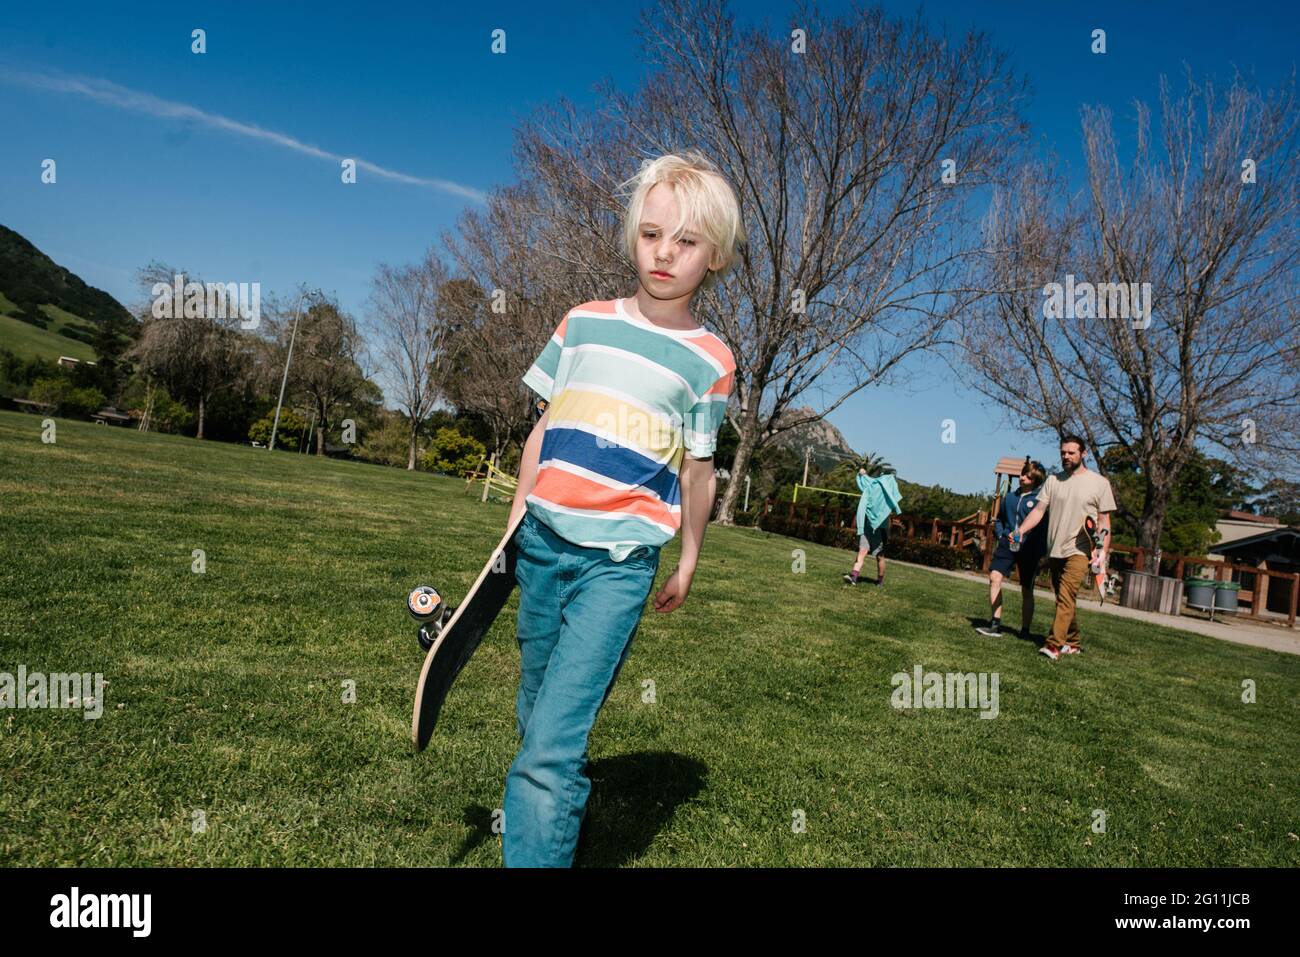 USA, California, Big Sur, Boy with skateboard walking in park Stock Photo